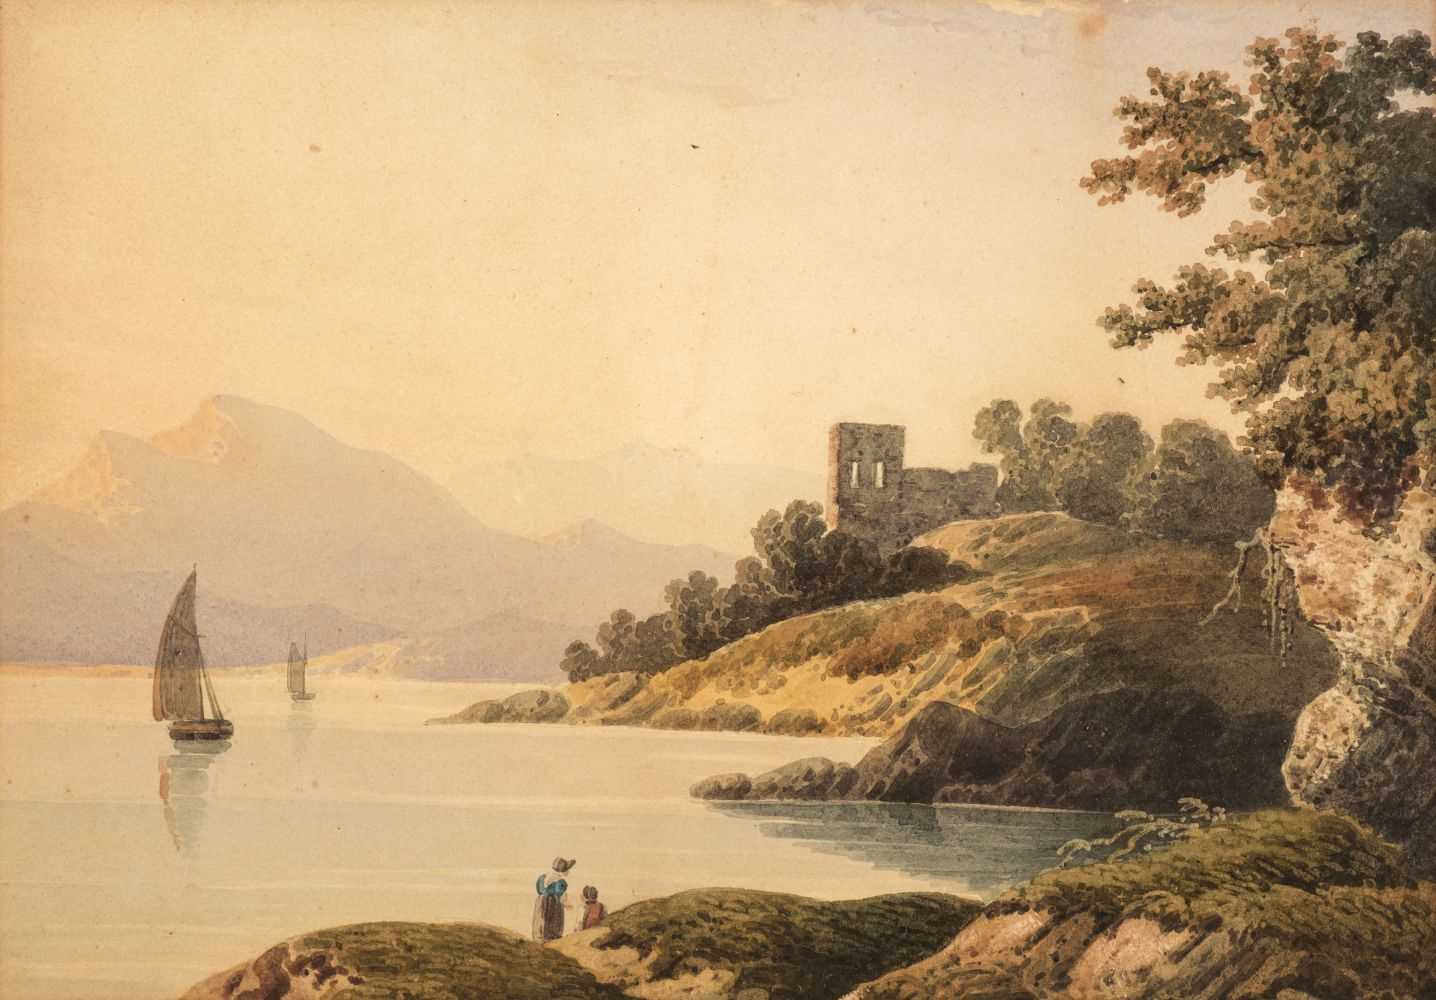 Lot 356 - Varley (John, 1778-1842). Landscape with lake